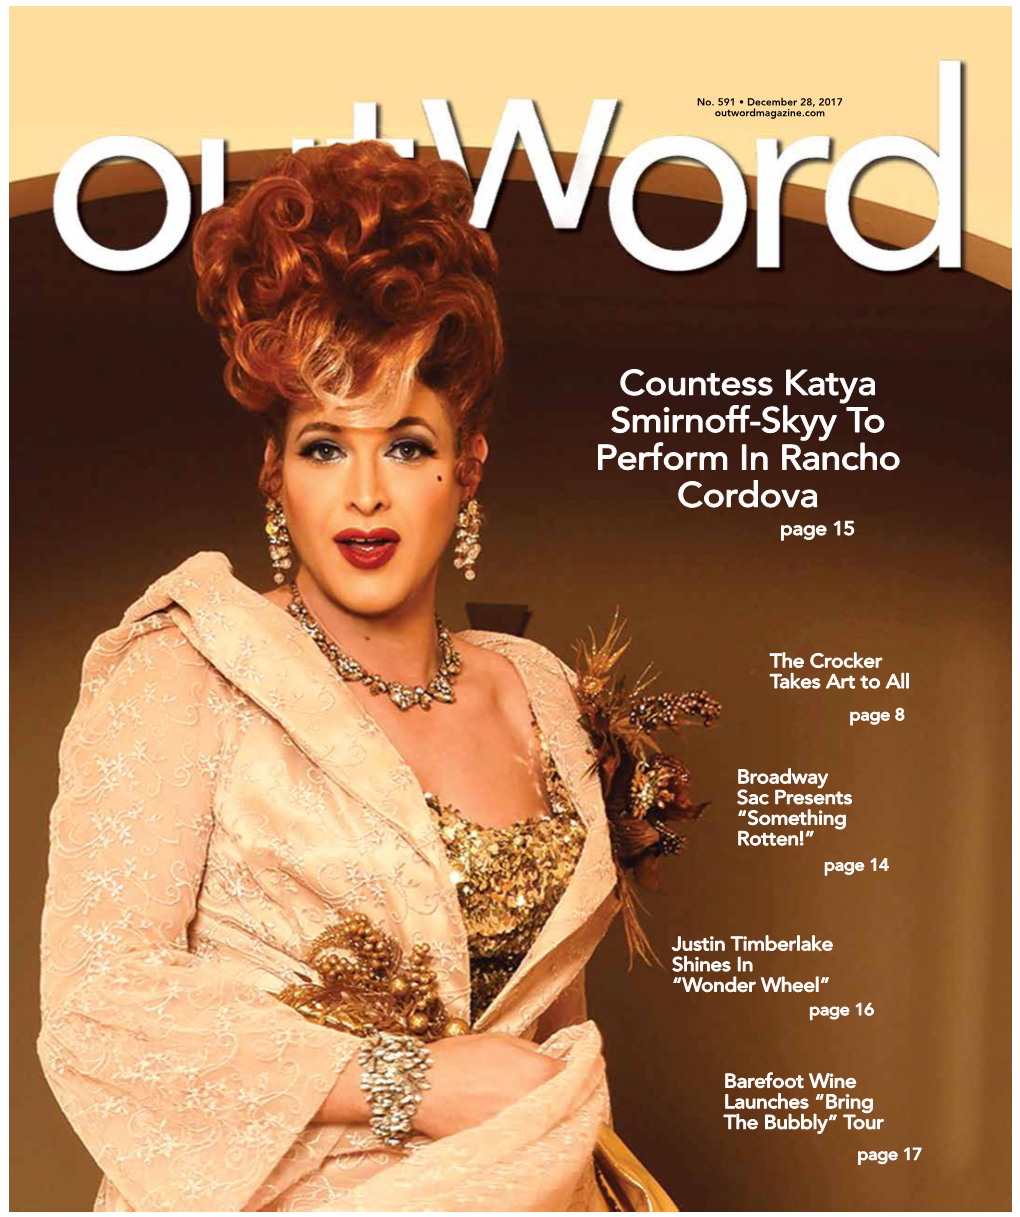 Countess Katya Smirnoff-Skyy to Perform in Rancho Cordova Page 15